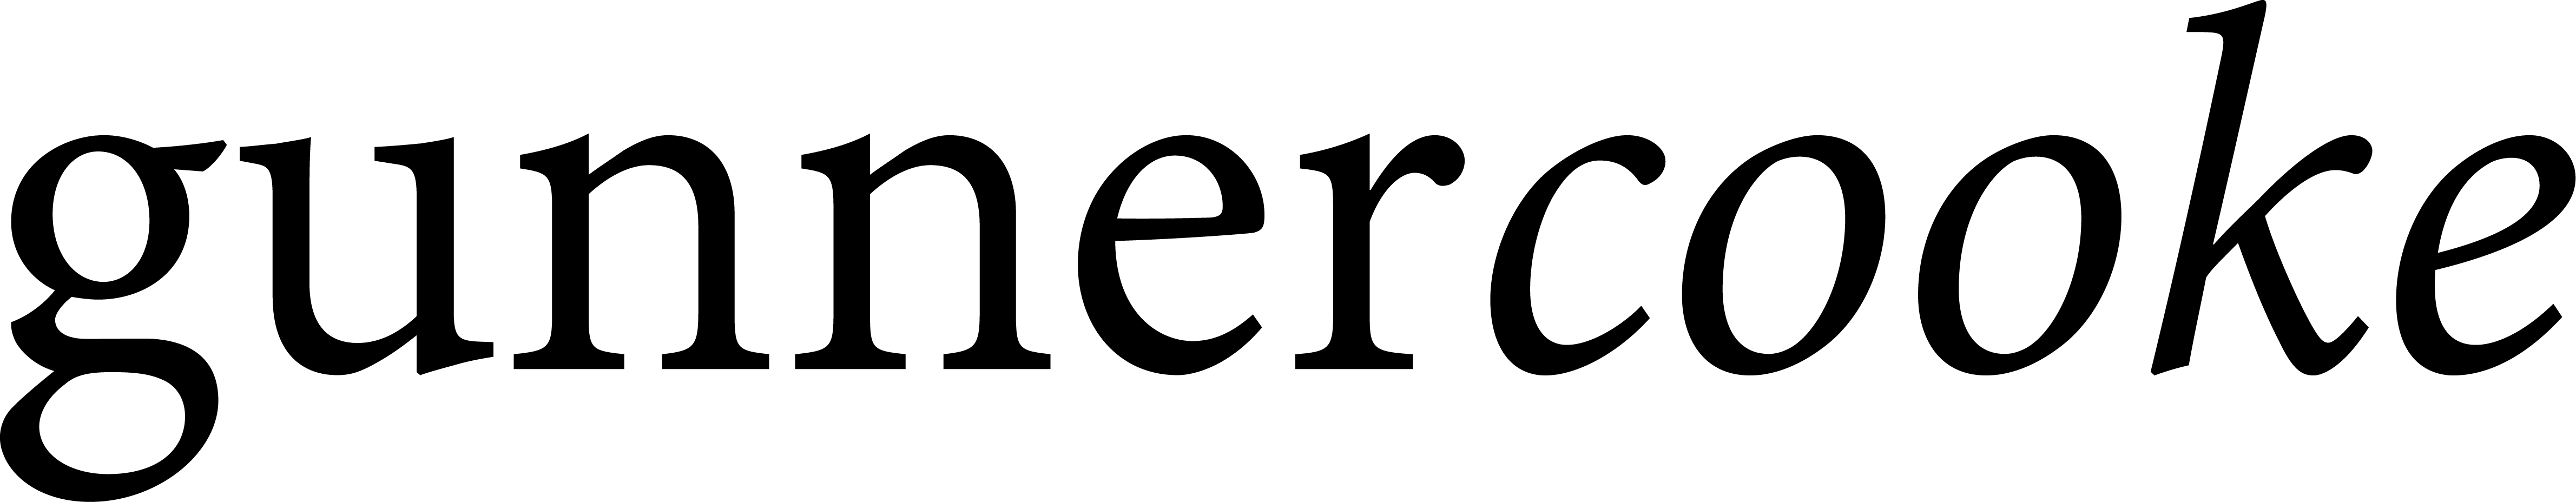 gunnercooke Logo - Black.png